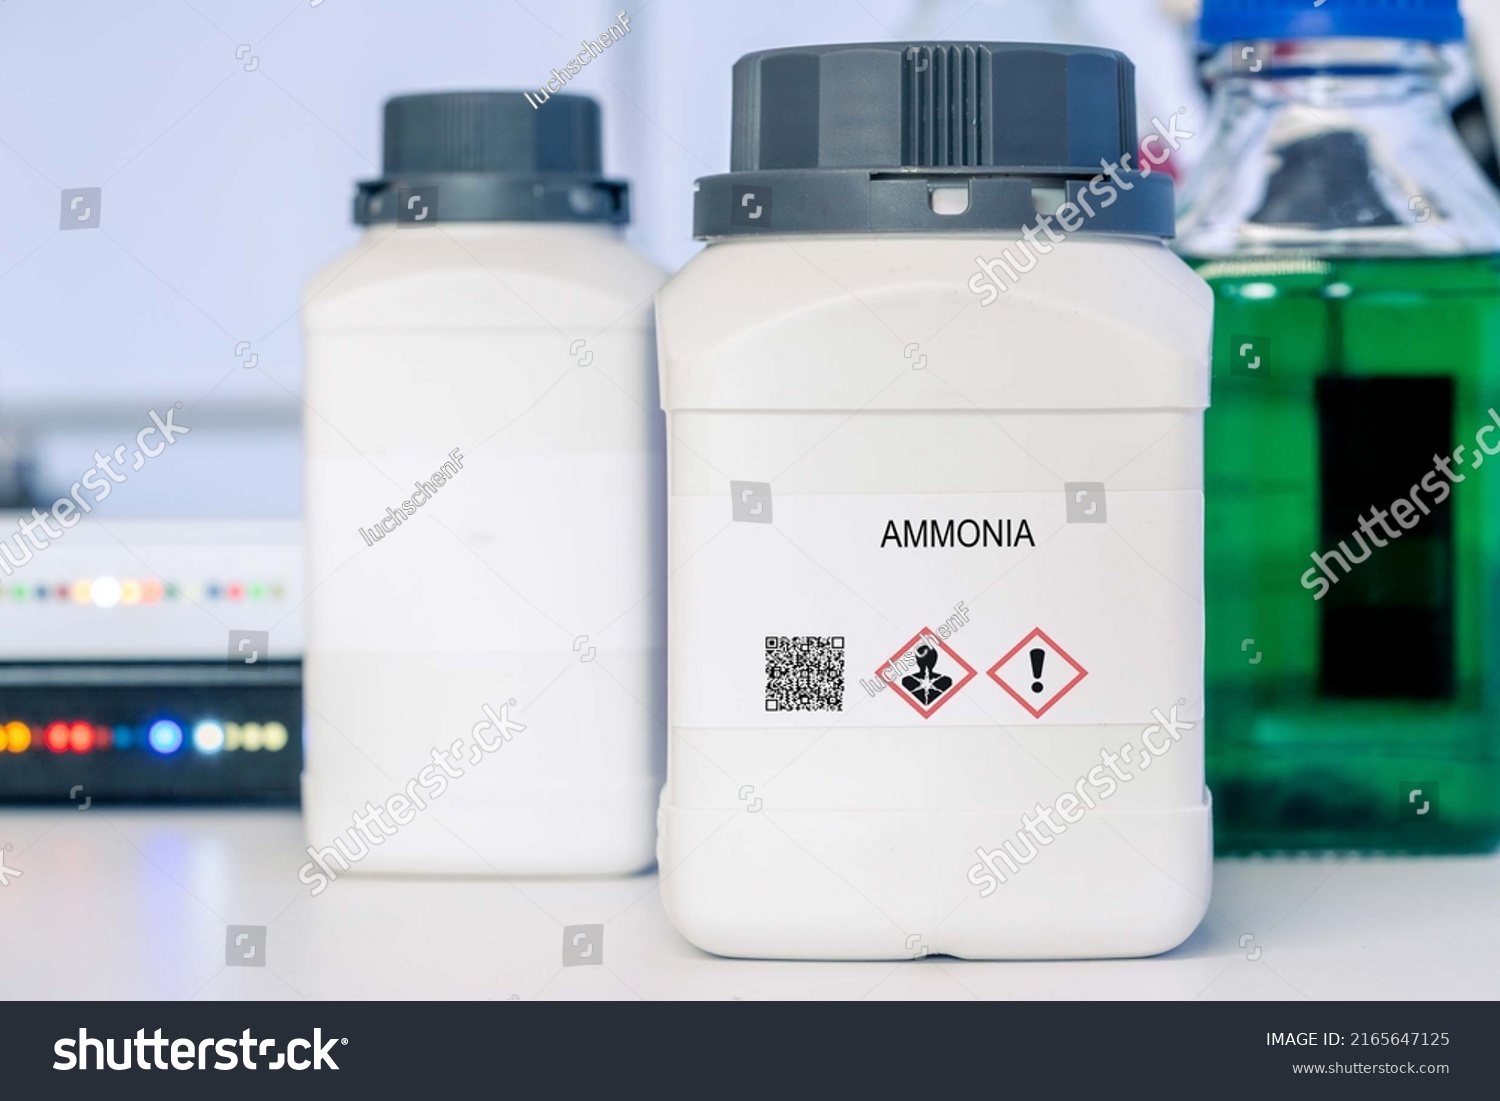 Ammonia Ammonia Hazardous Chemical Laboratory Packaging Stock Photo ...